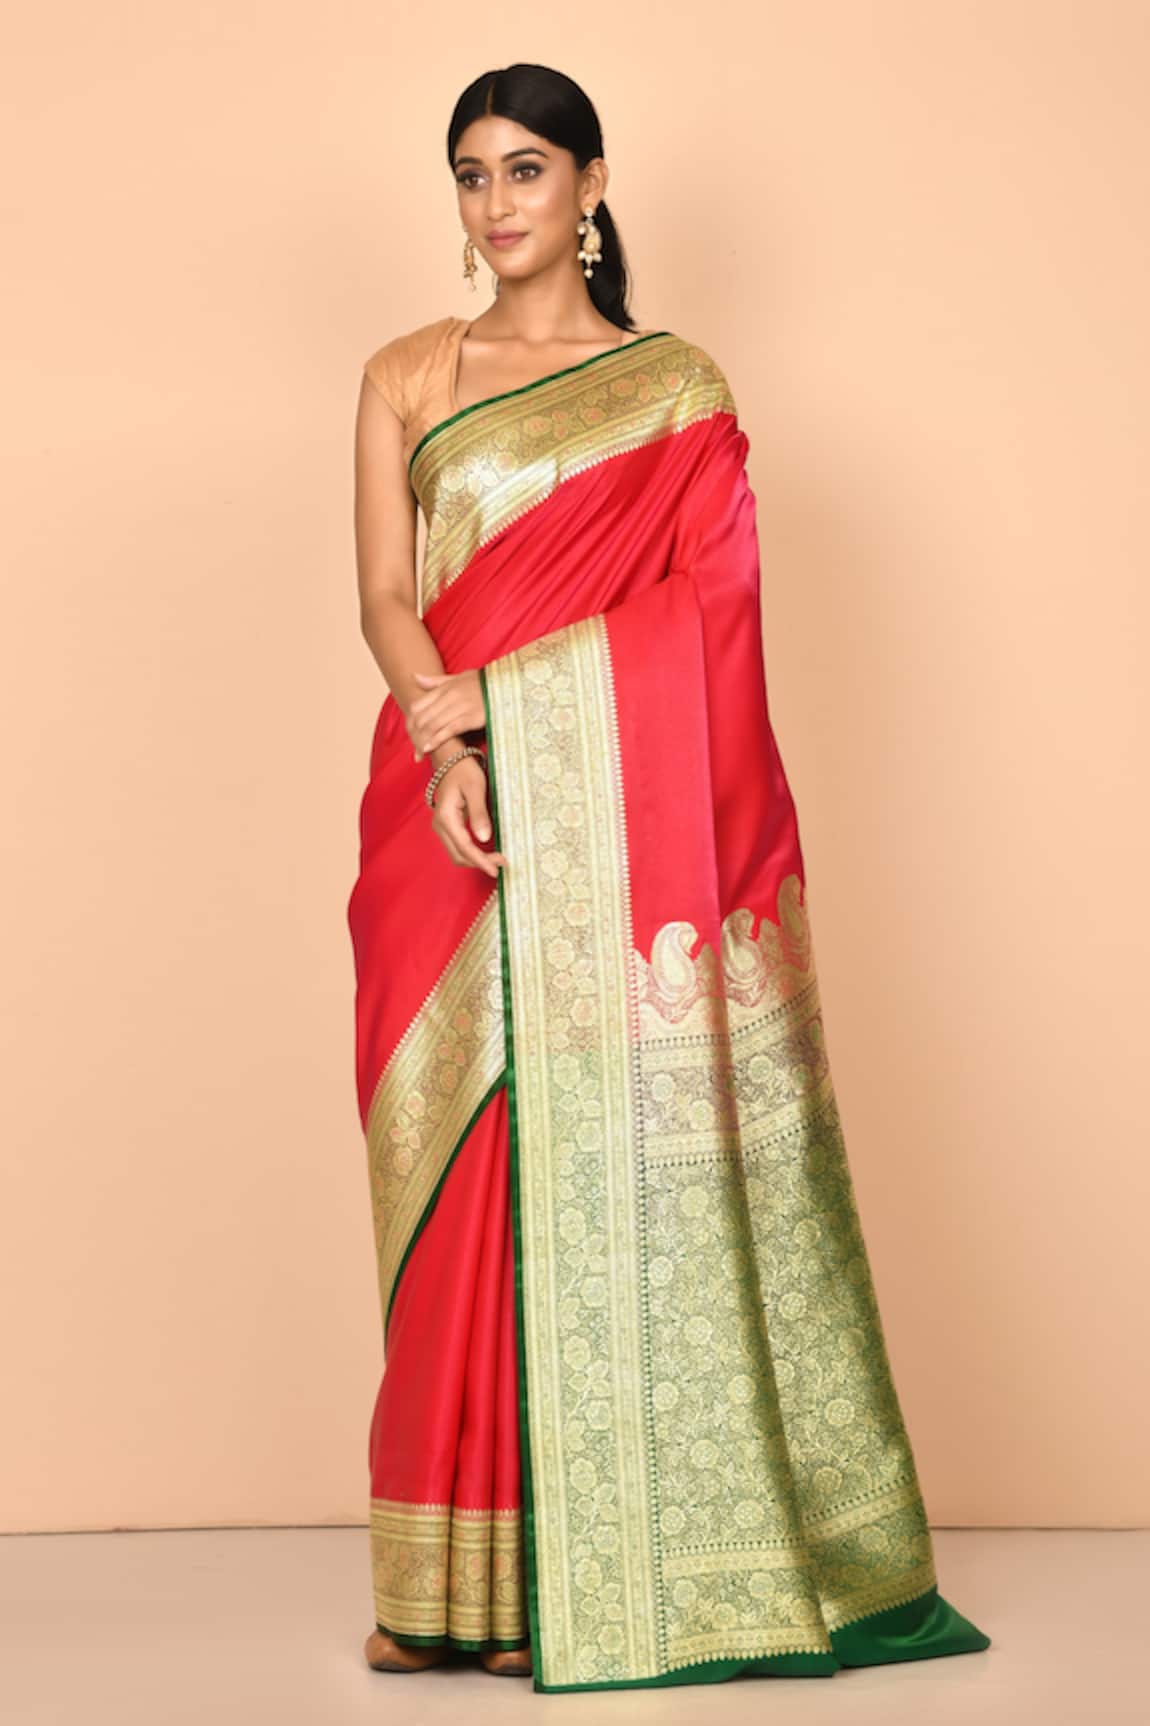 Arihant Rai Sinha Banarasi Silk Handloom Woven Saree